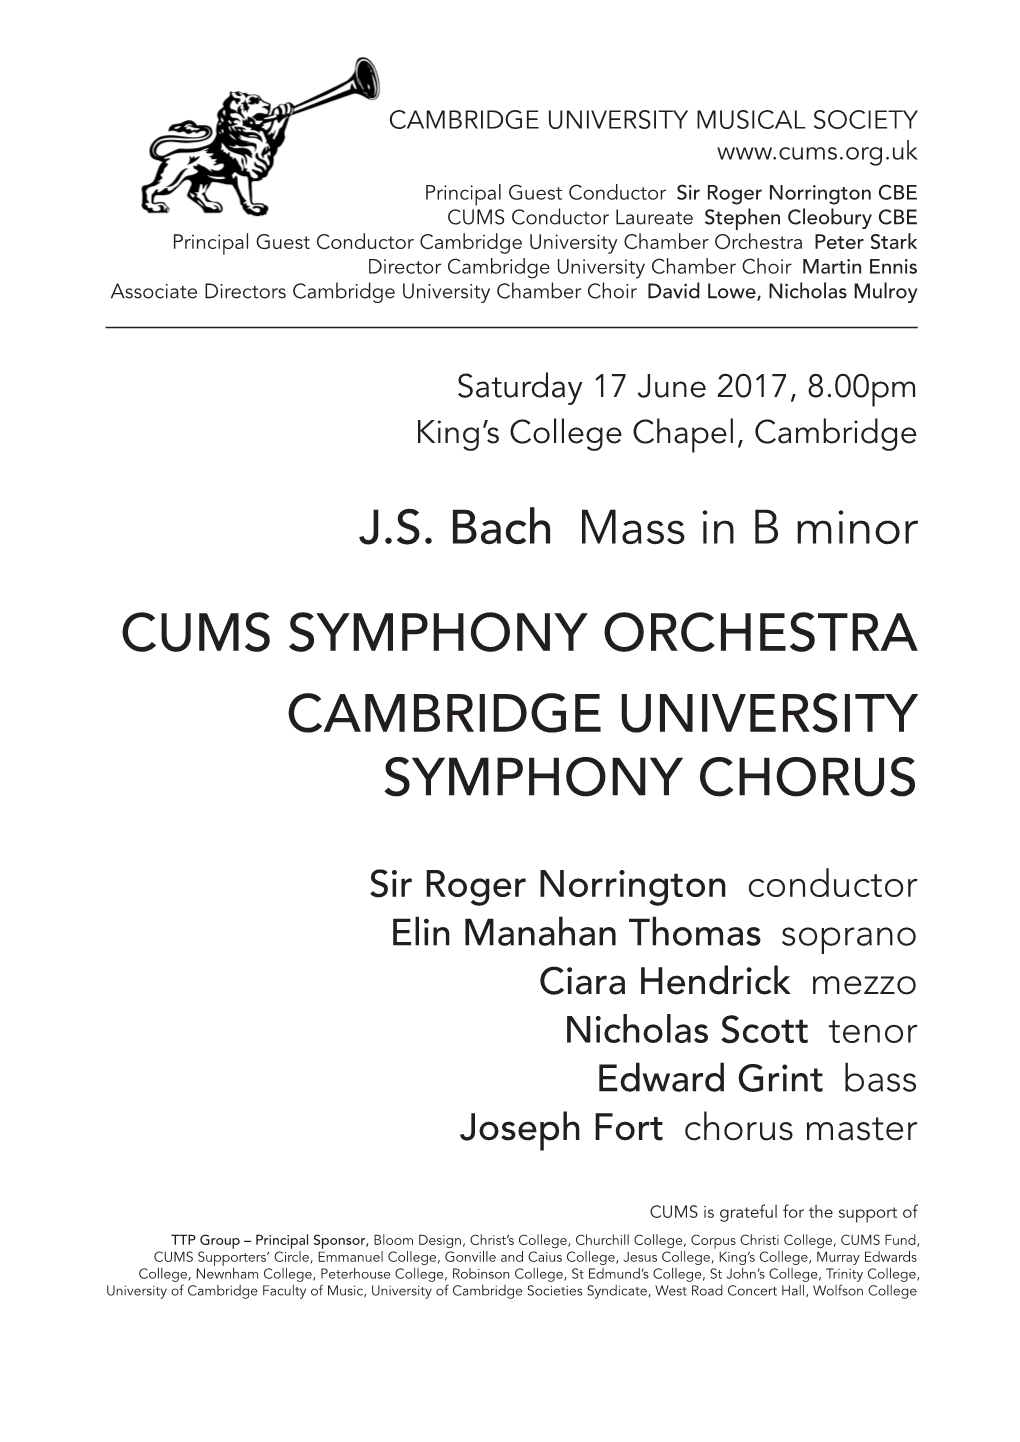 Cums Symphony Orchestra Cambridge University Symphony Chorus